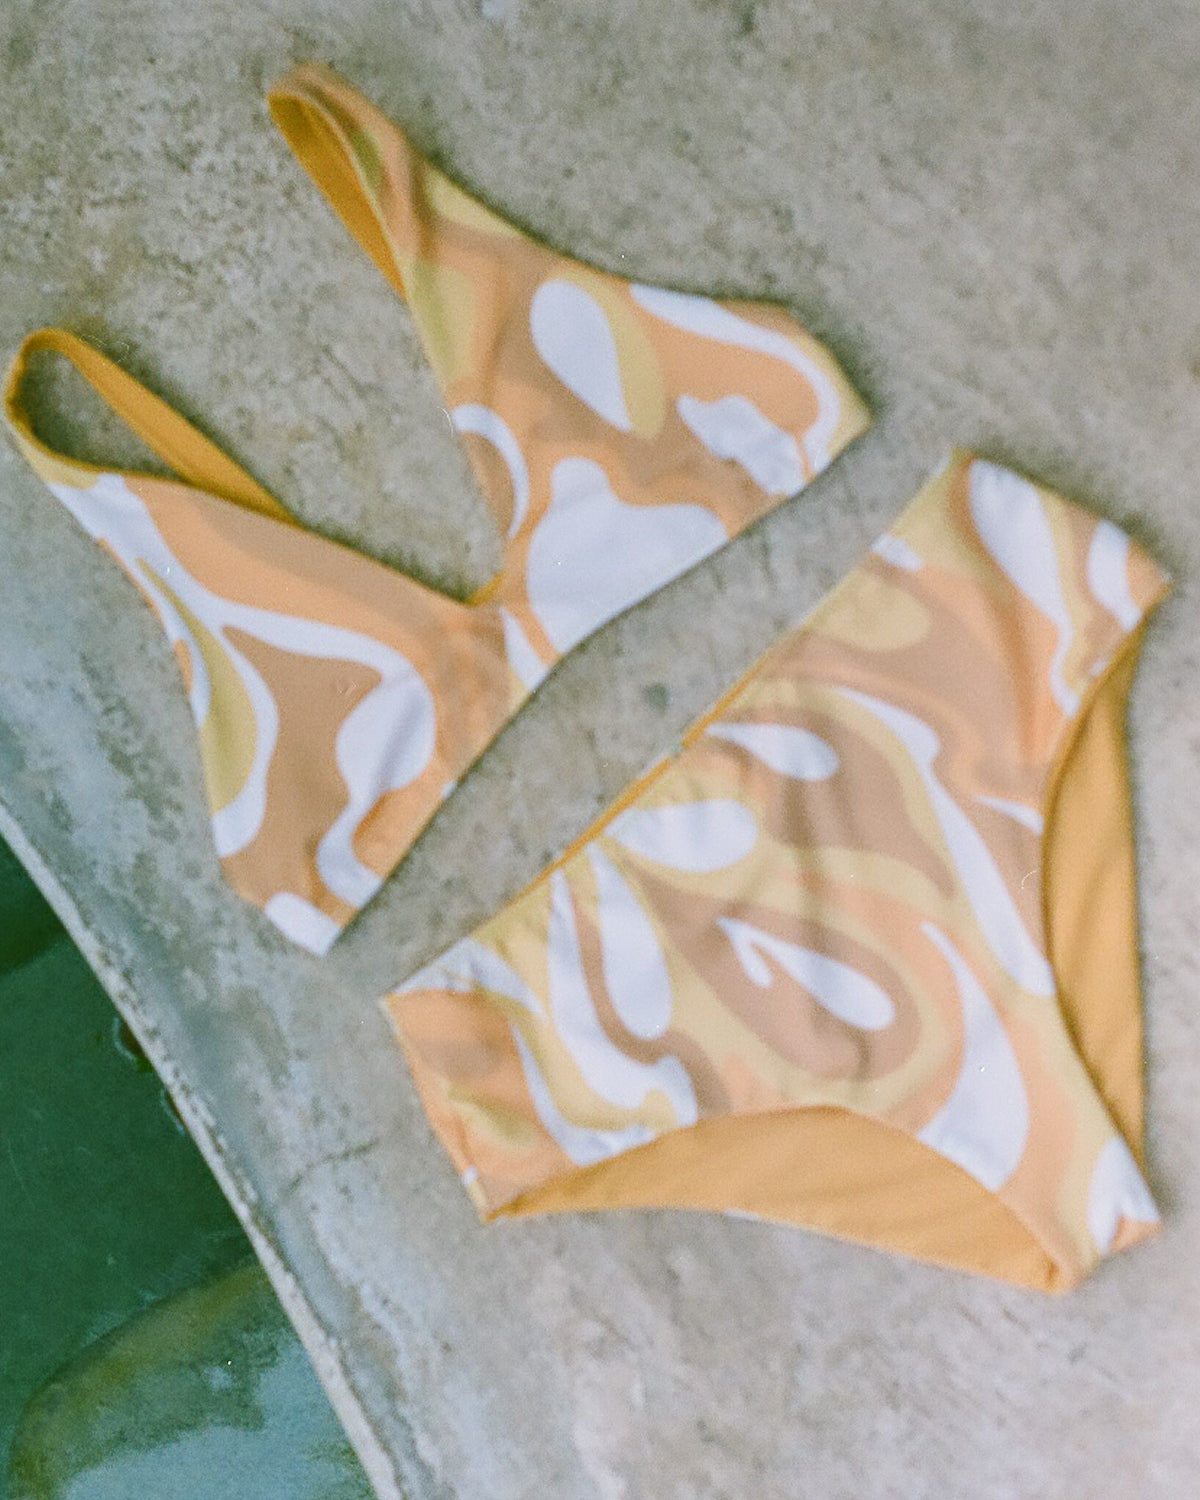 Brasilia Solaris Swirl Pattern Yellow Reversible Bikini Swim Suit Sun Protection